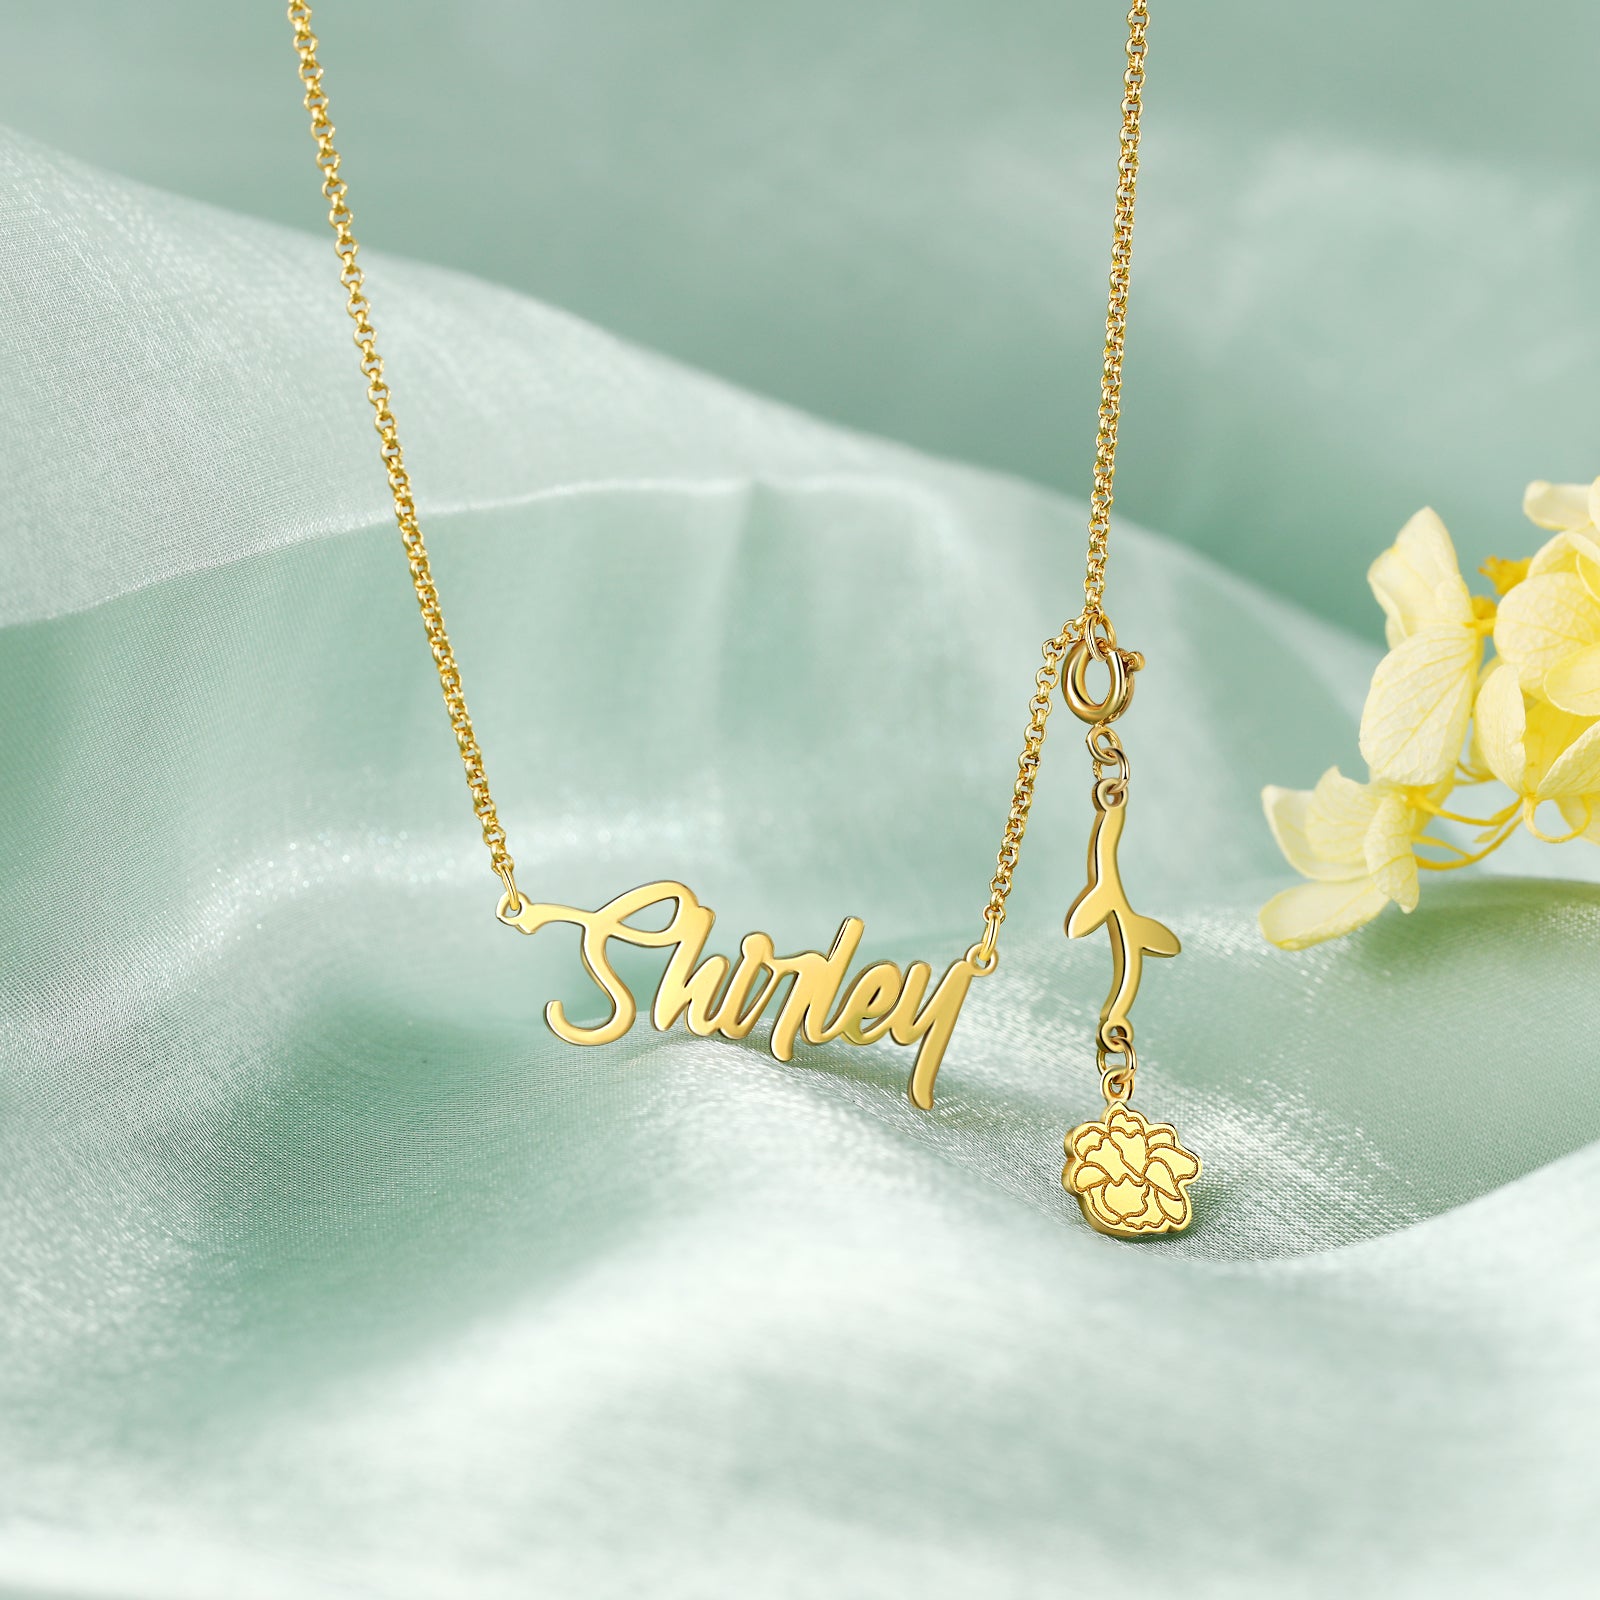 925 Sterling Silver Custom Birthflower Necklace - SAOROPHO